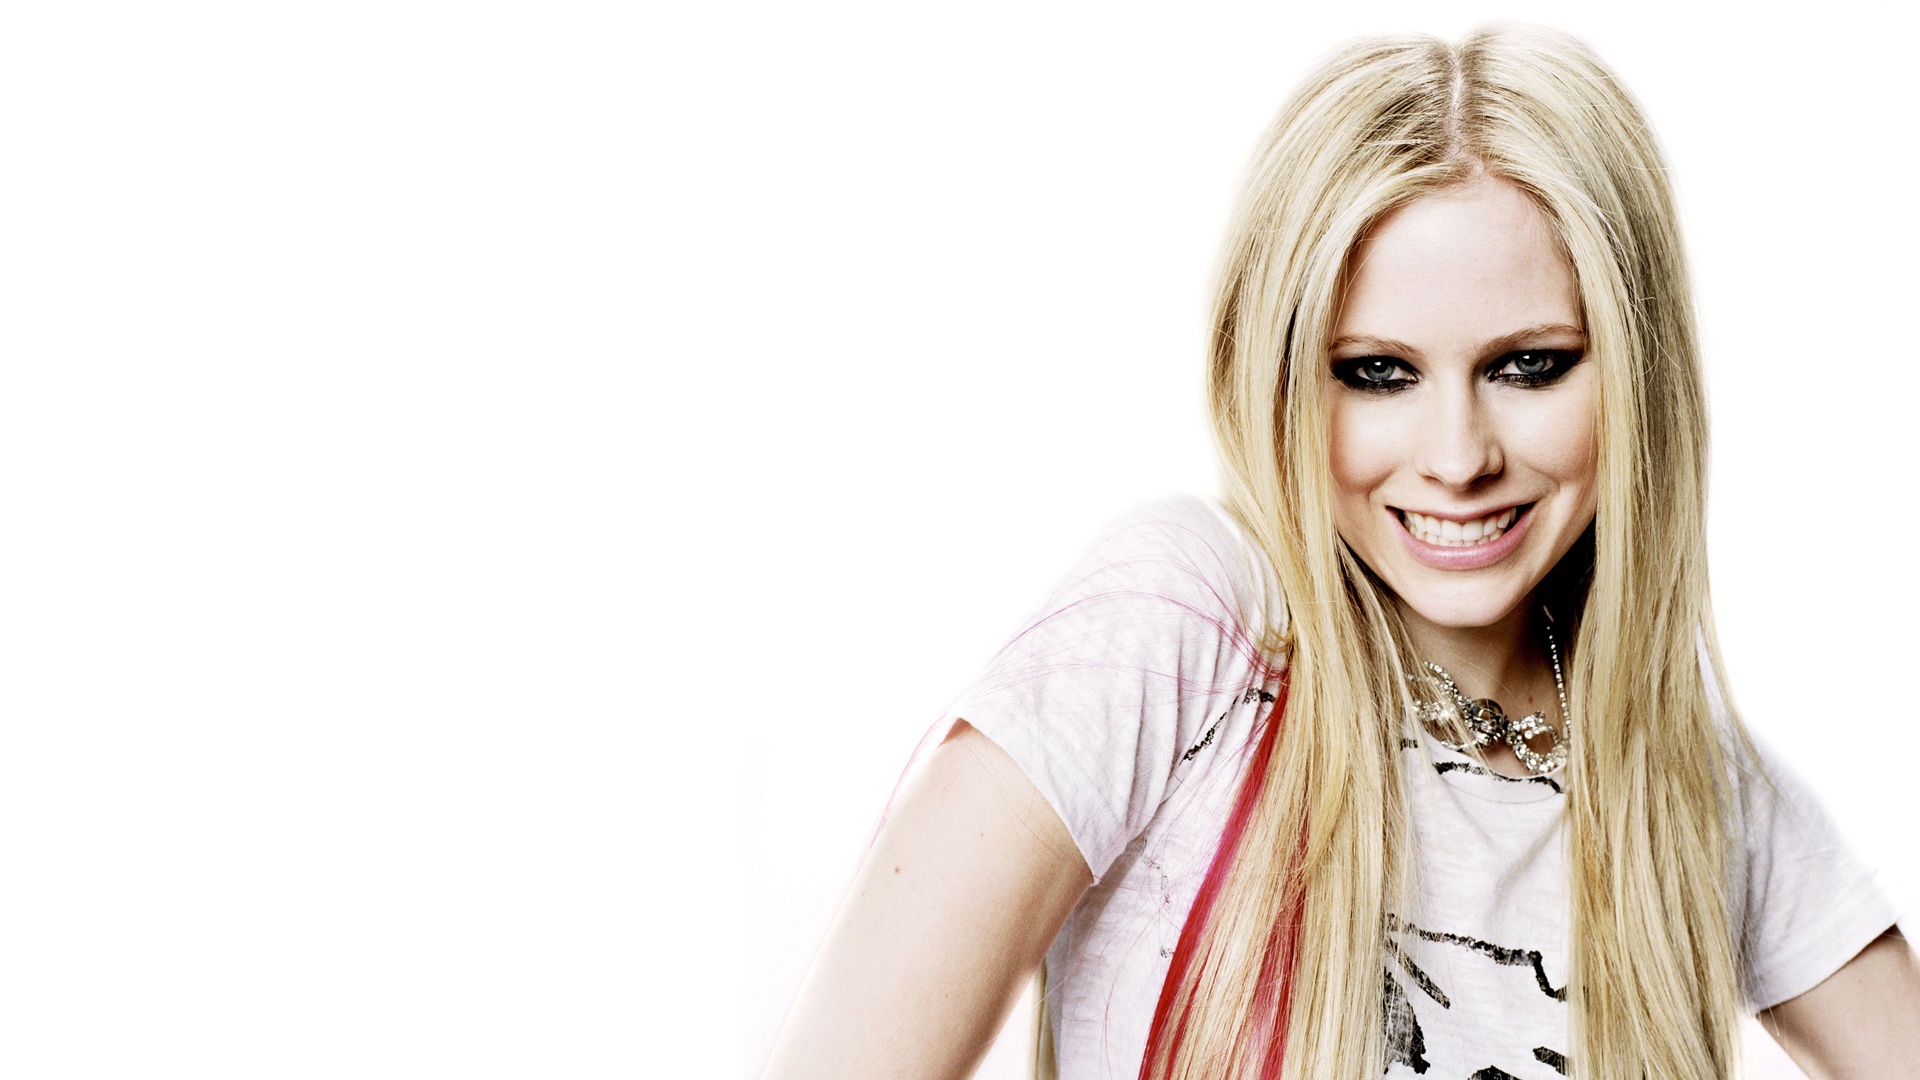 Avril Lavigne The Best Damn Thing Photoshoot Wallpaper